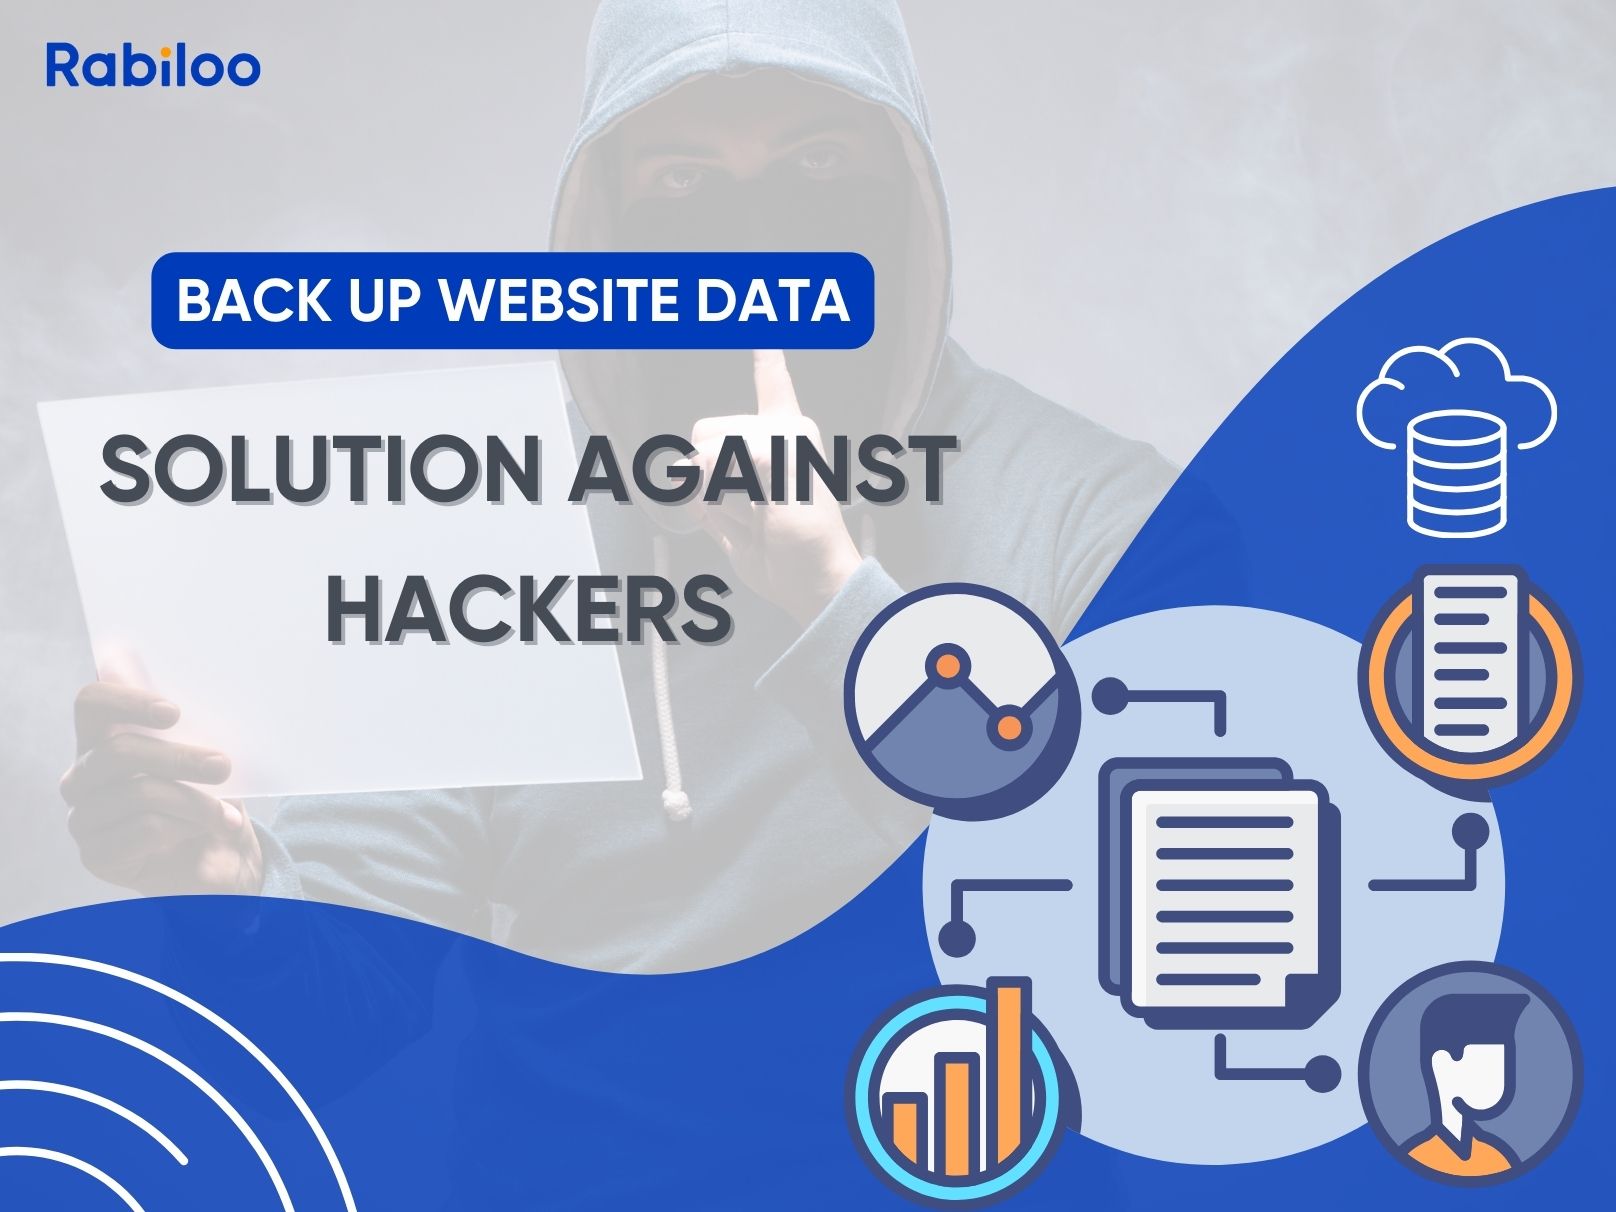 Backup website data - Solution against hackers